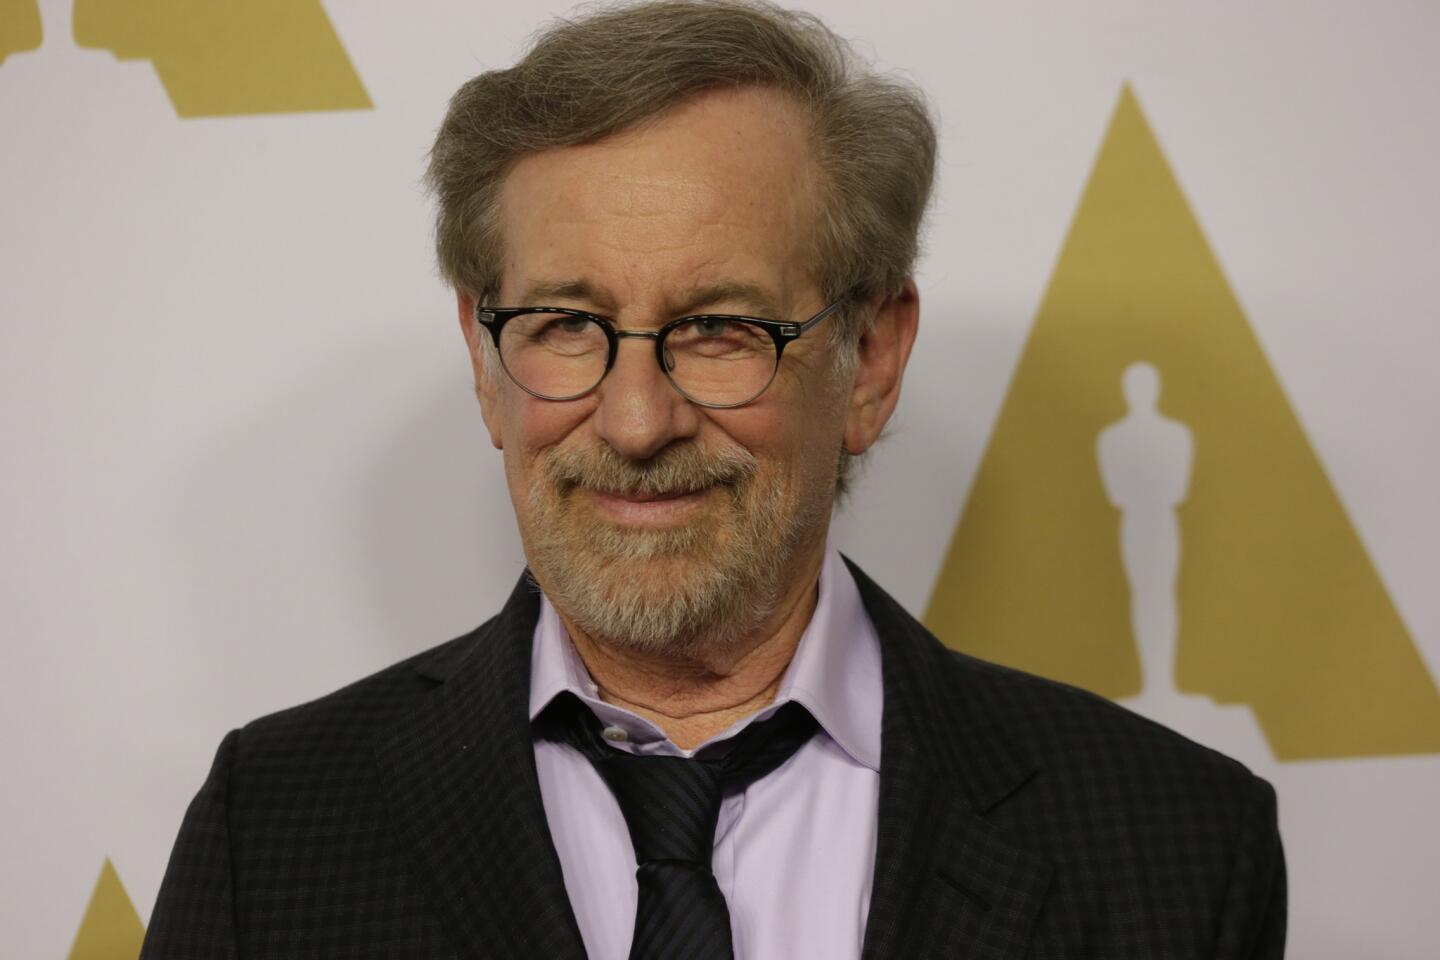 Steven Spielberg | Academy Awards luncheon